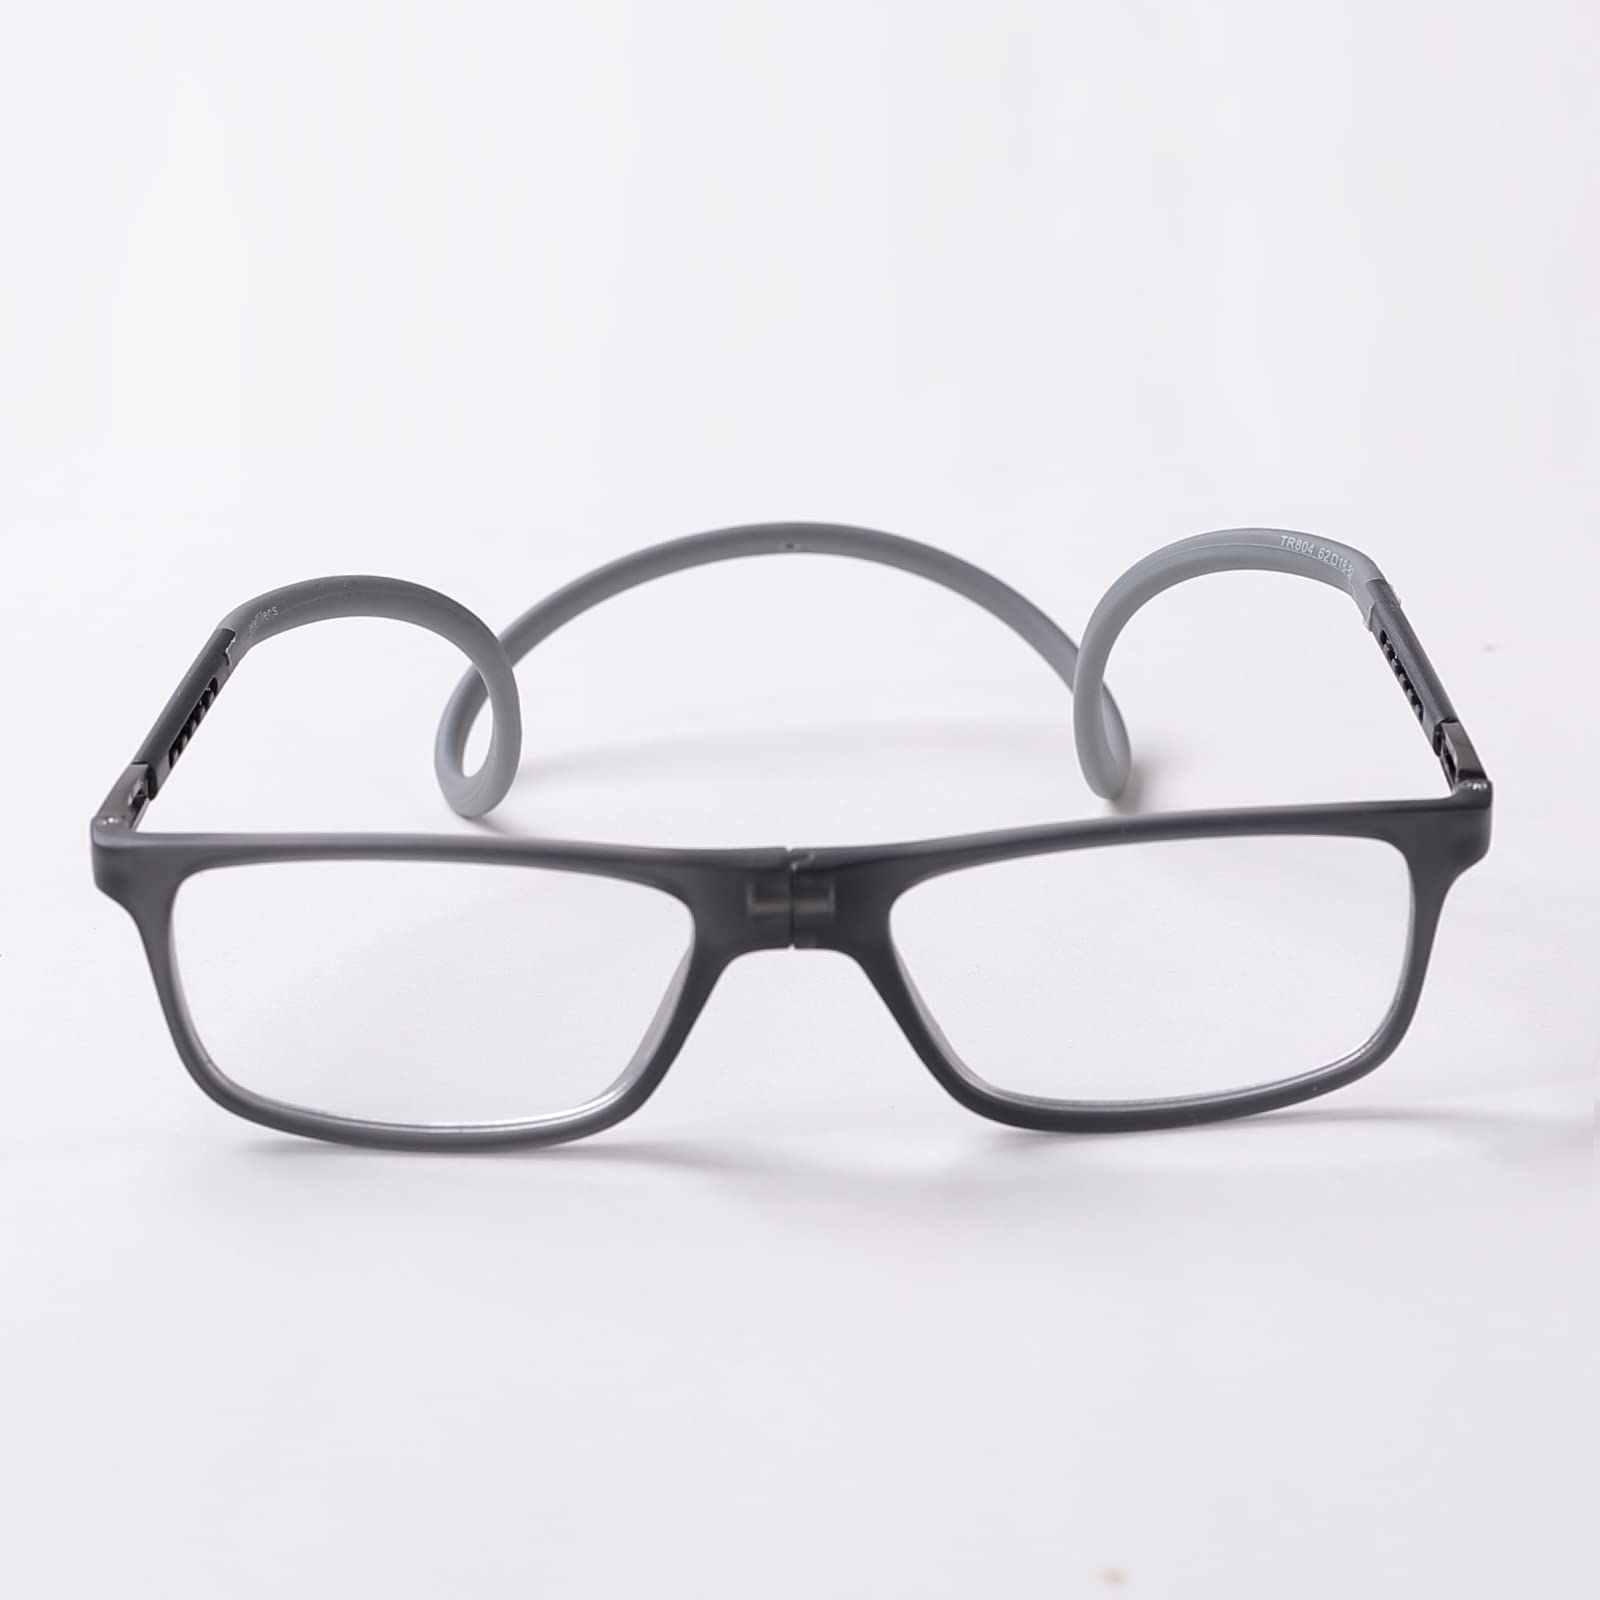 Intellilens Magnetic Reading Glasses For Men & Women For Near Vision | UV Protected | Foldable | Anti Reflection | Lightweight & Portable | Power (+1.00) | Grey